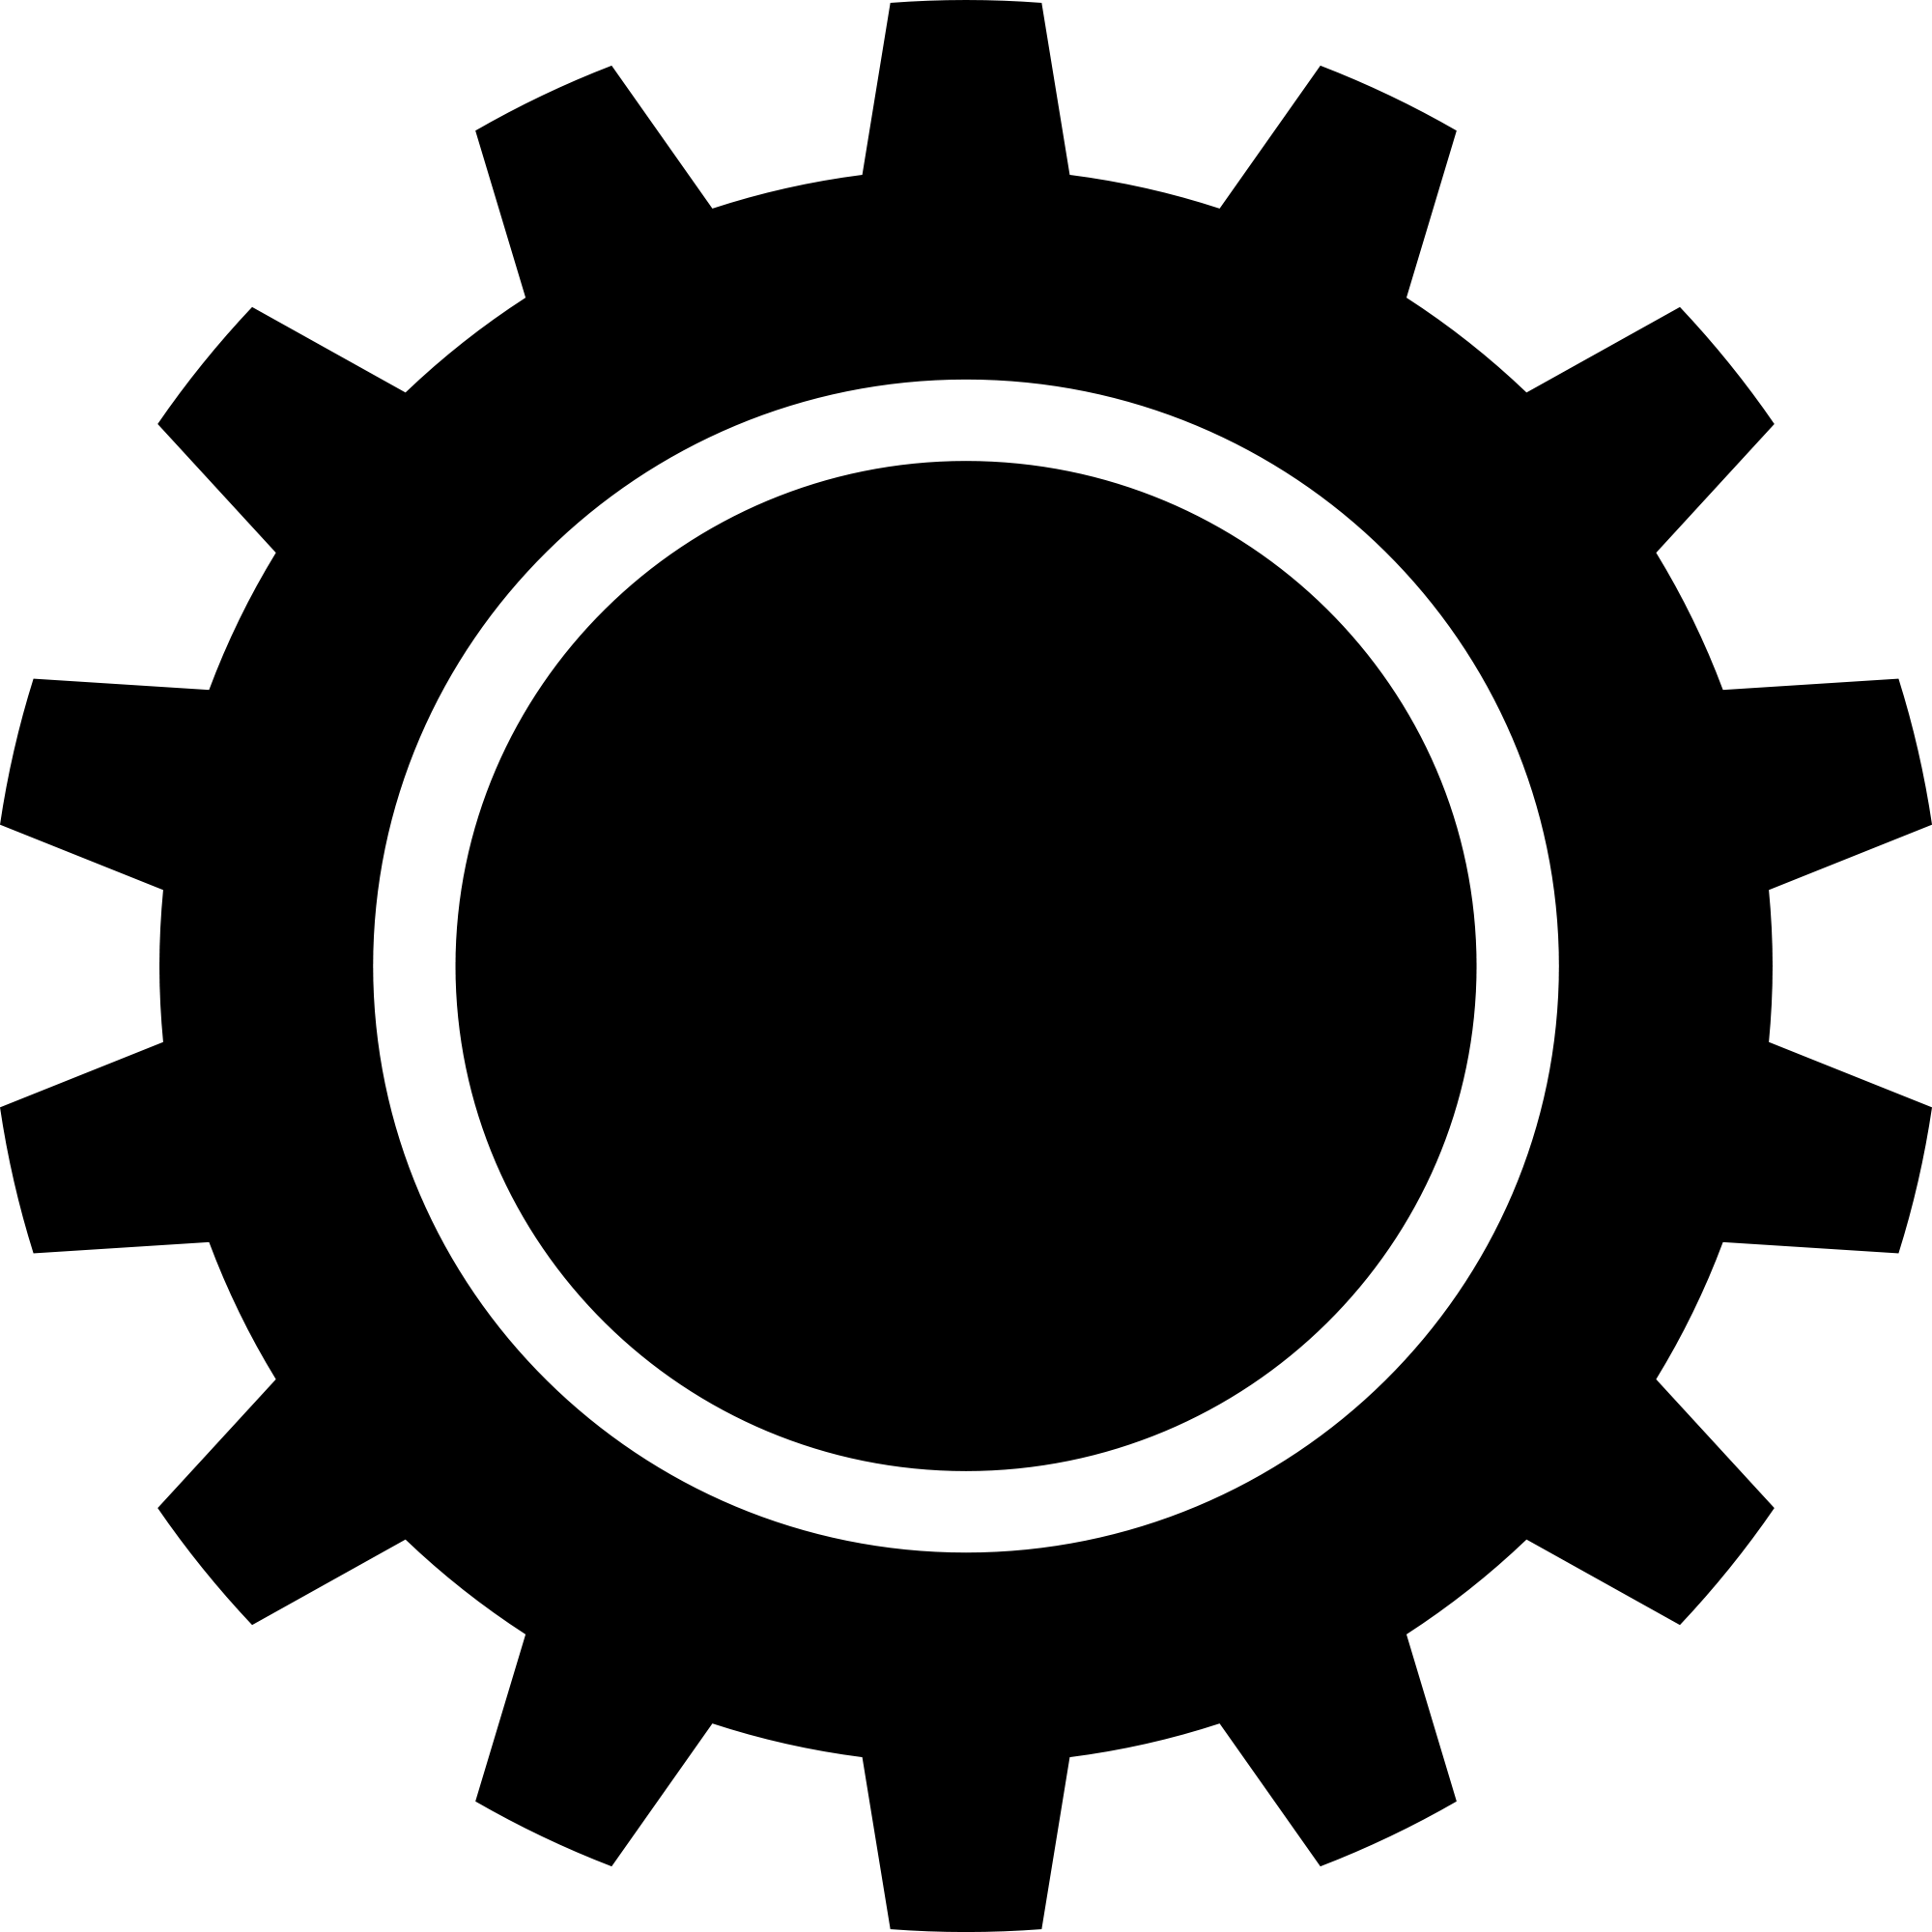 Gears Logo - gear Logo Vector PNG Transparent Gear Logo Vector.PNG Images. | PlusPNG